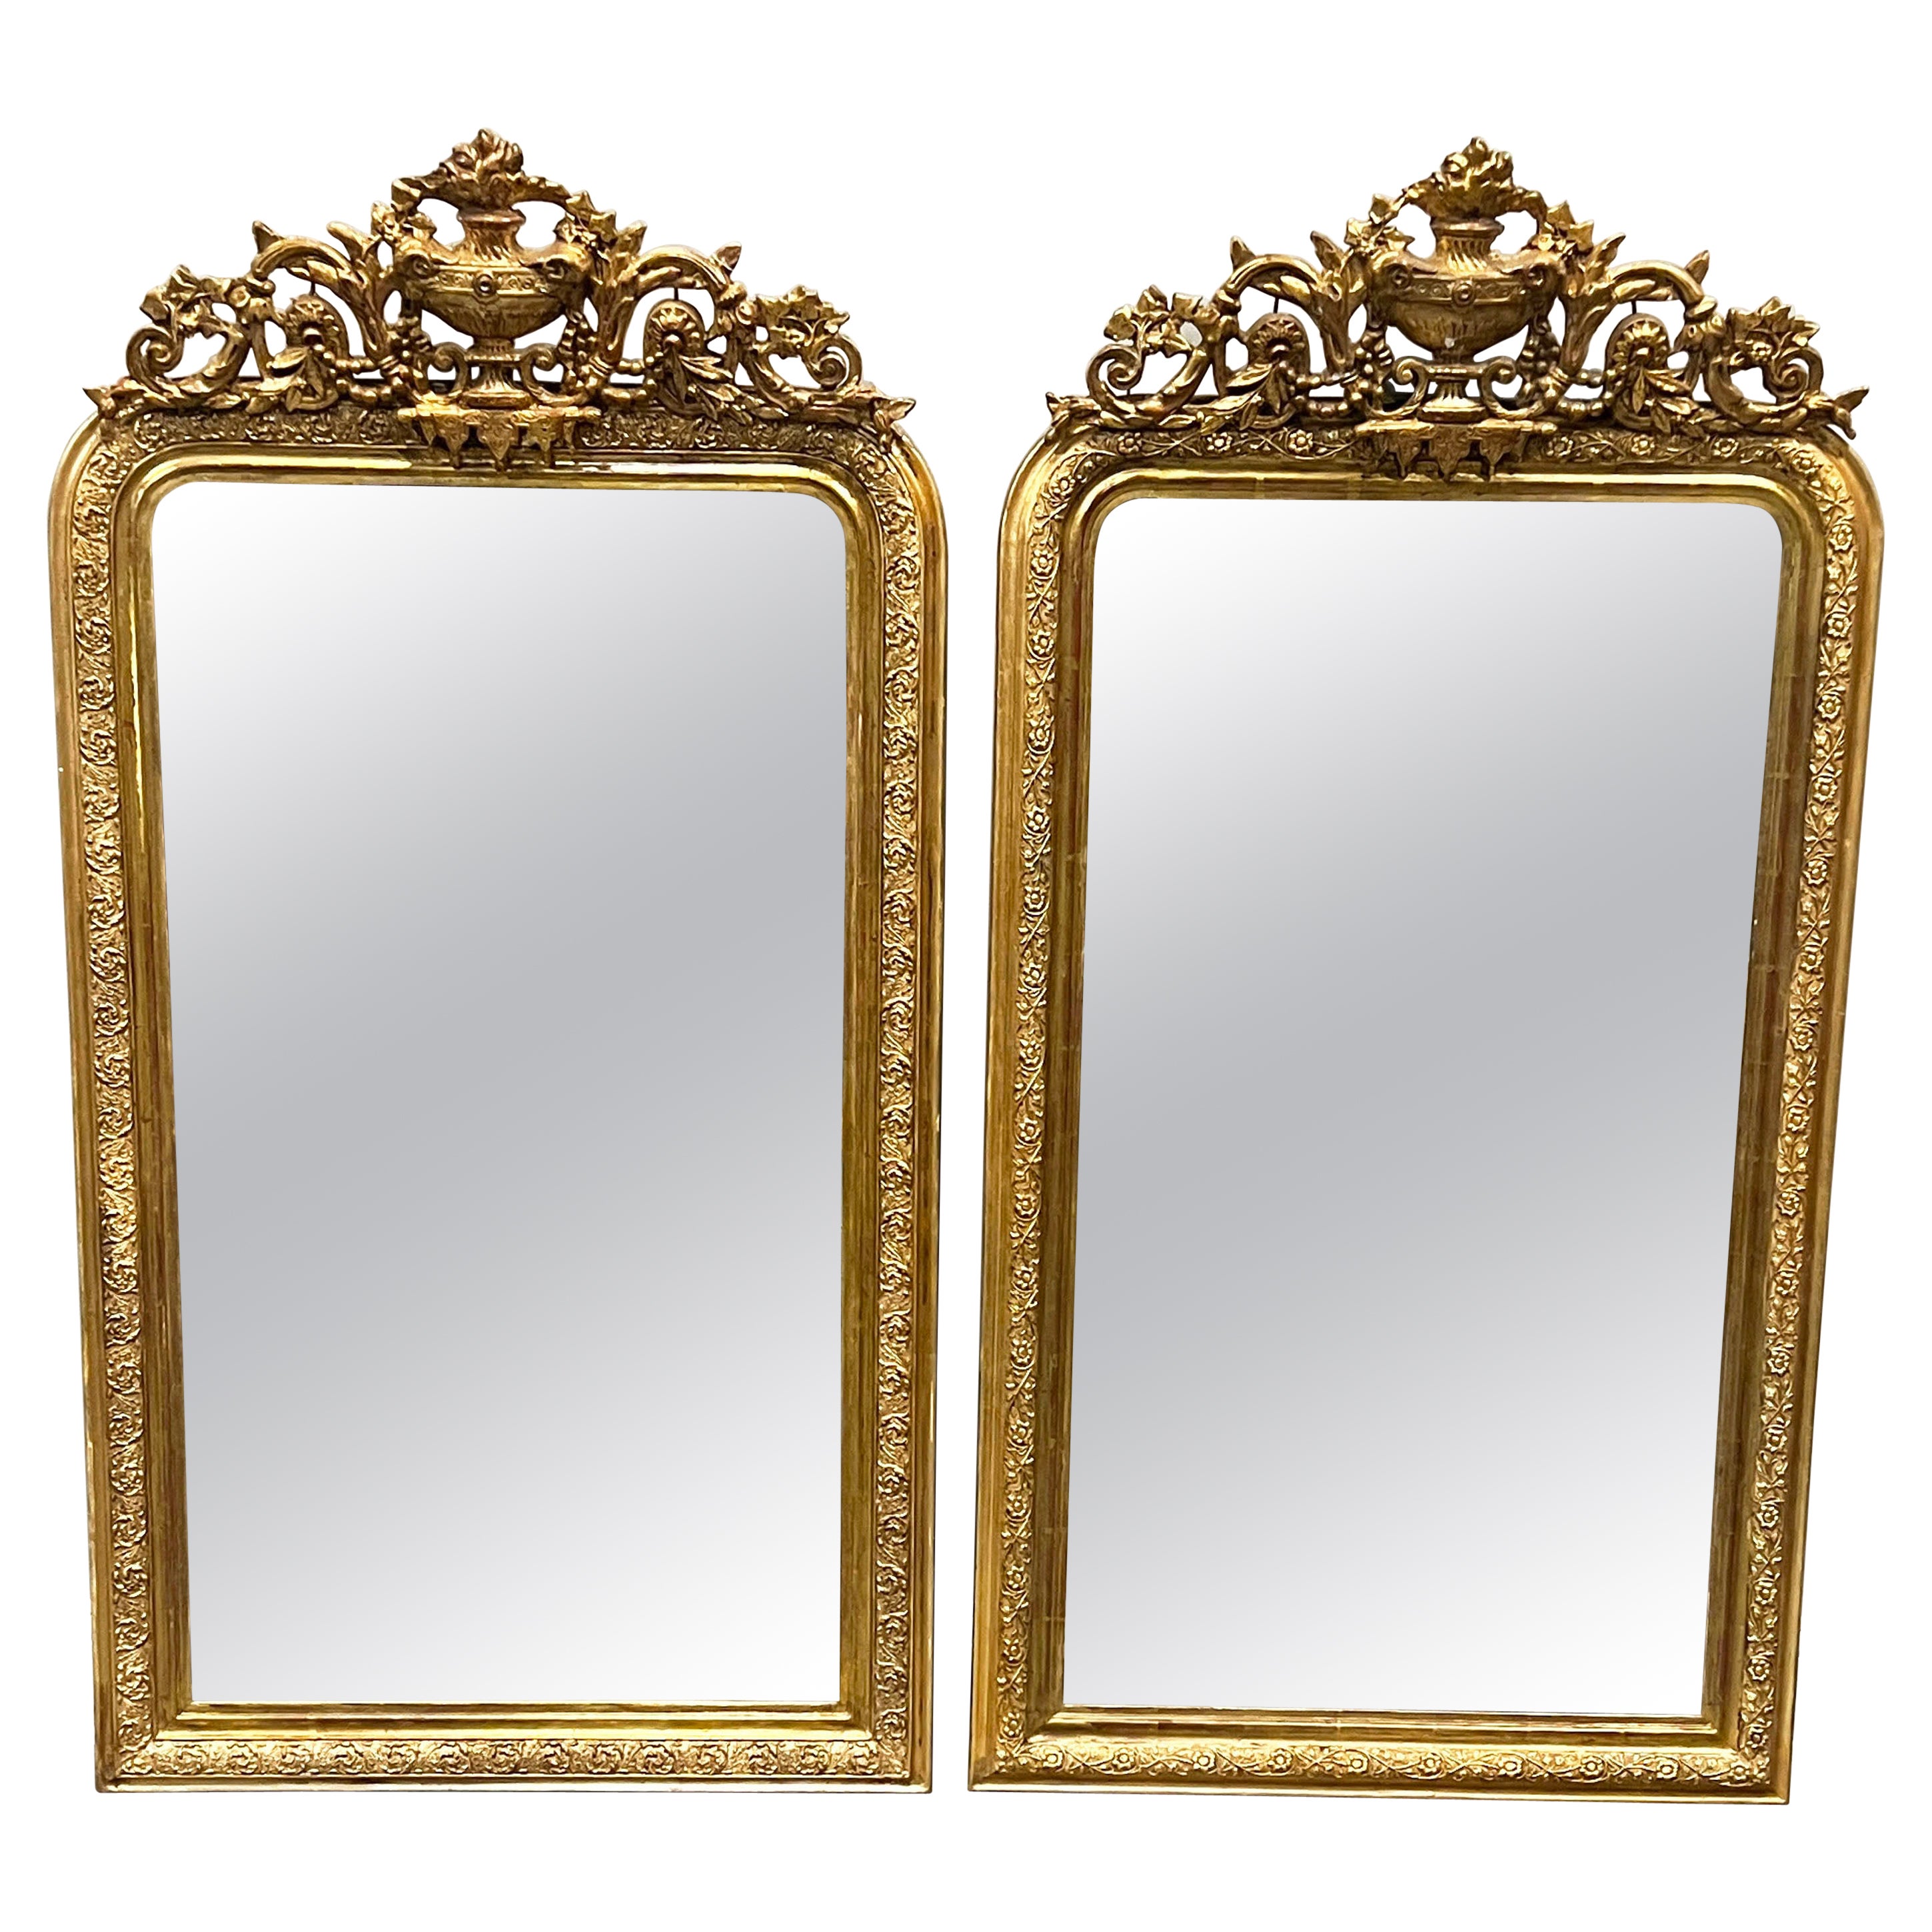 Pair of 19th Century French Louis XVI Style Mirrors